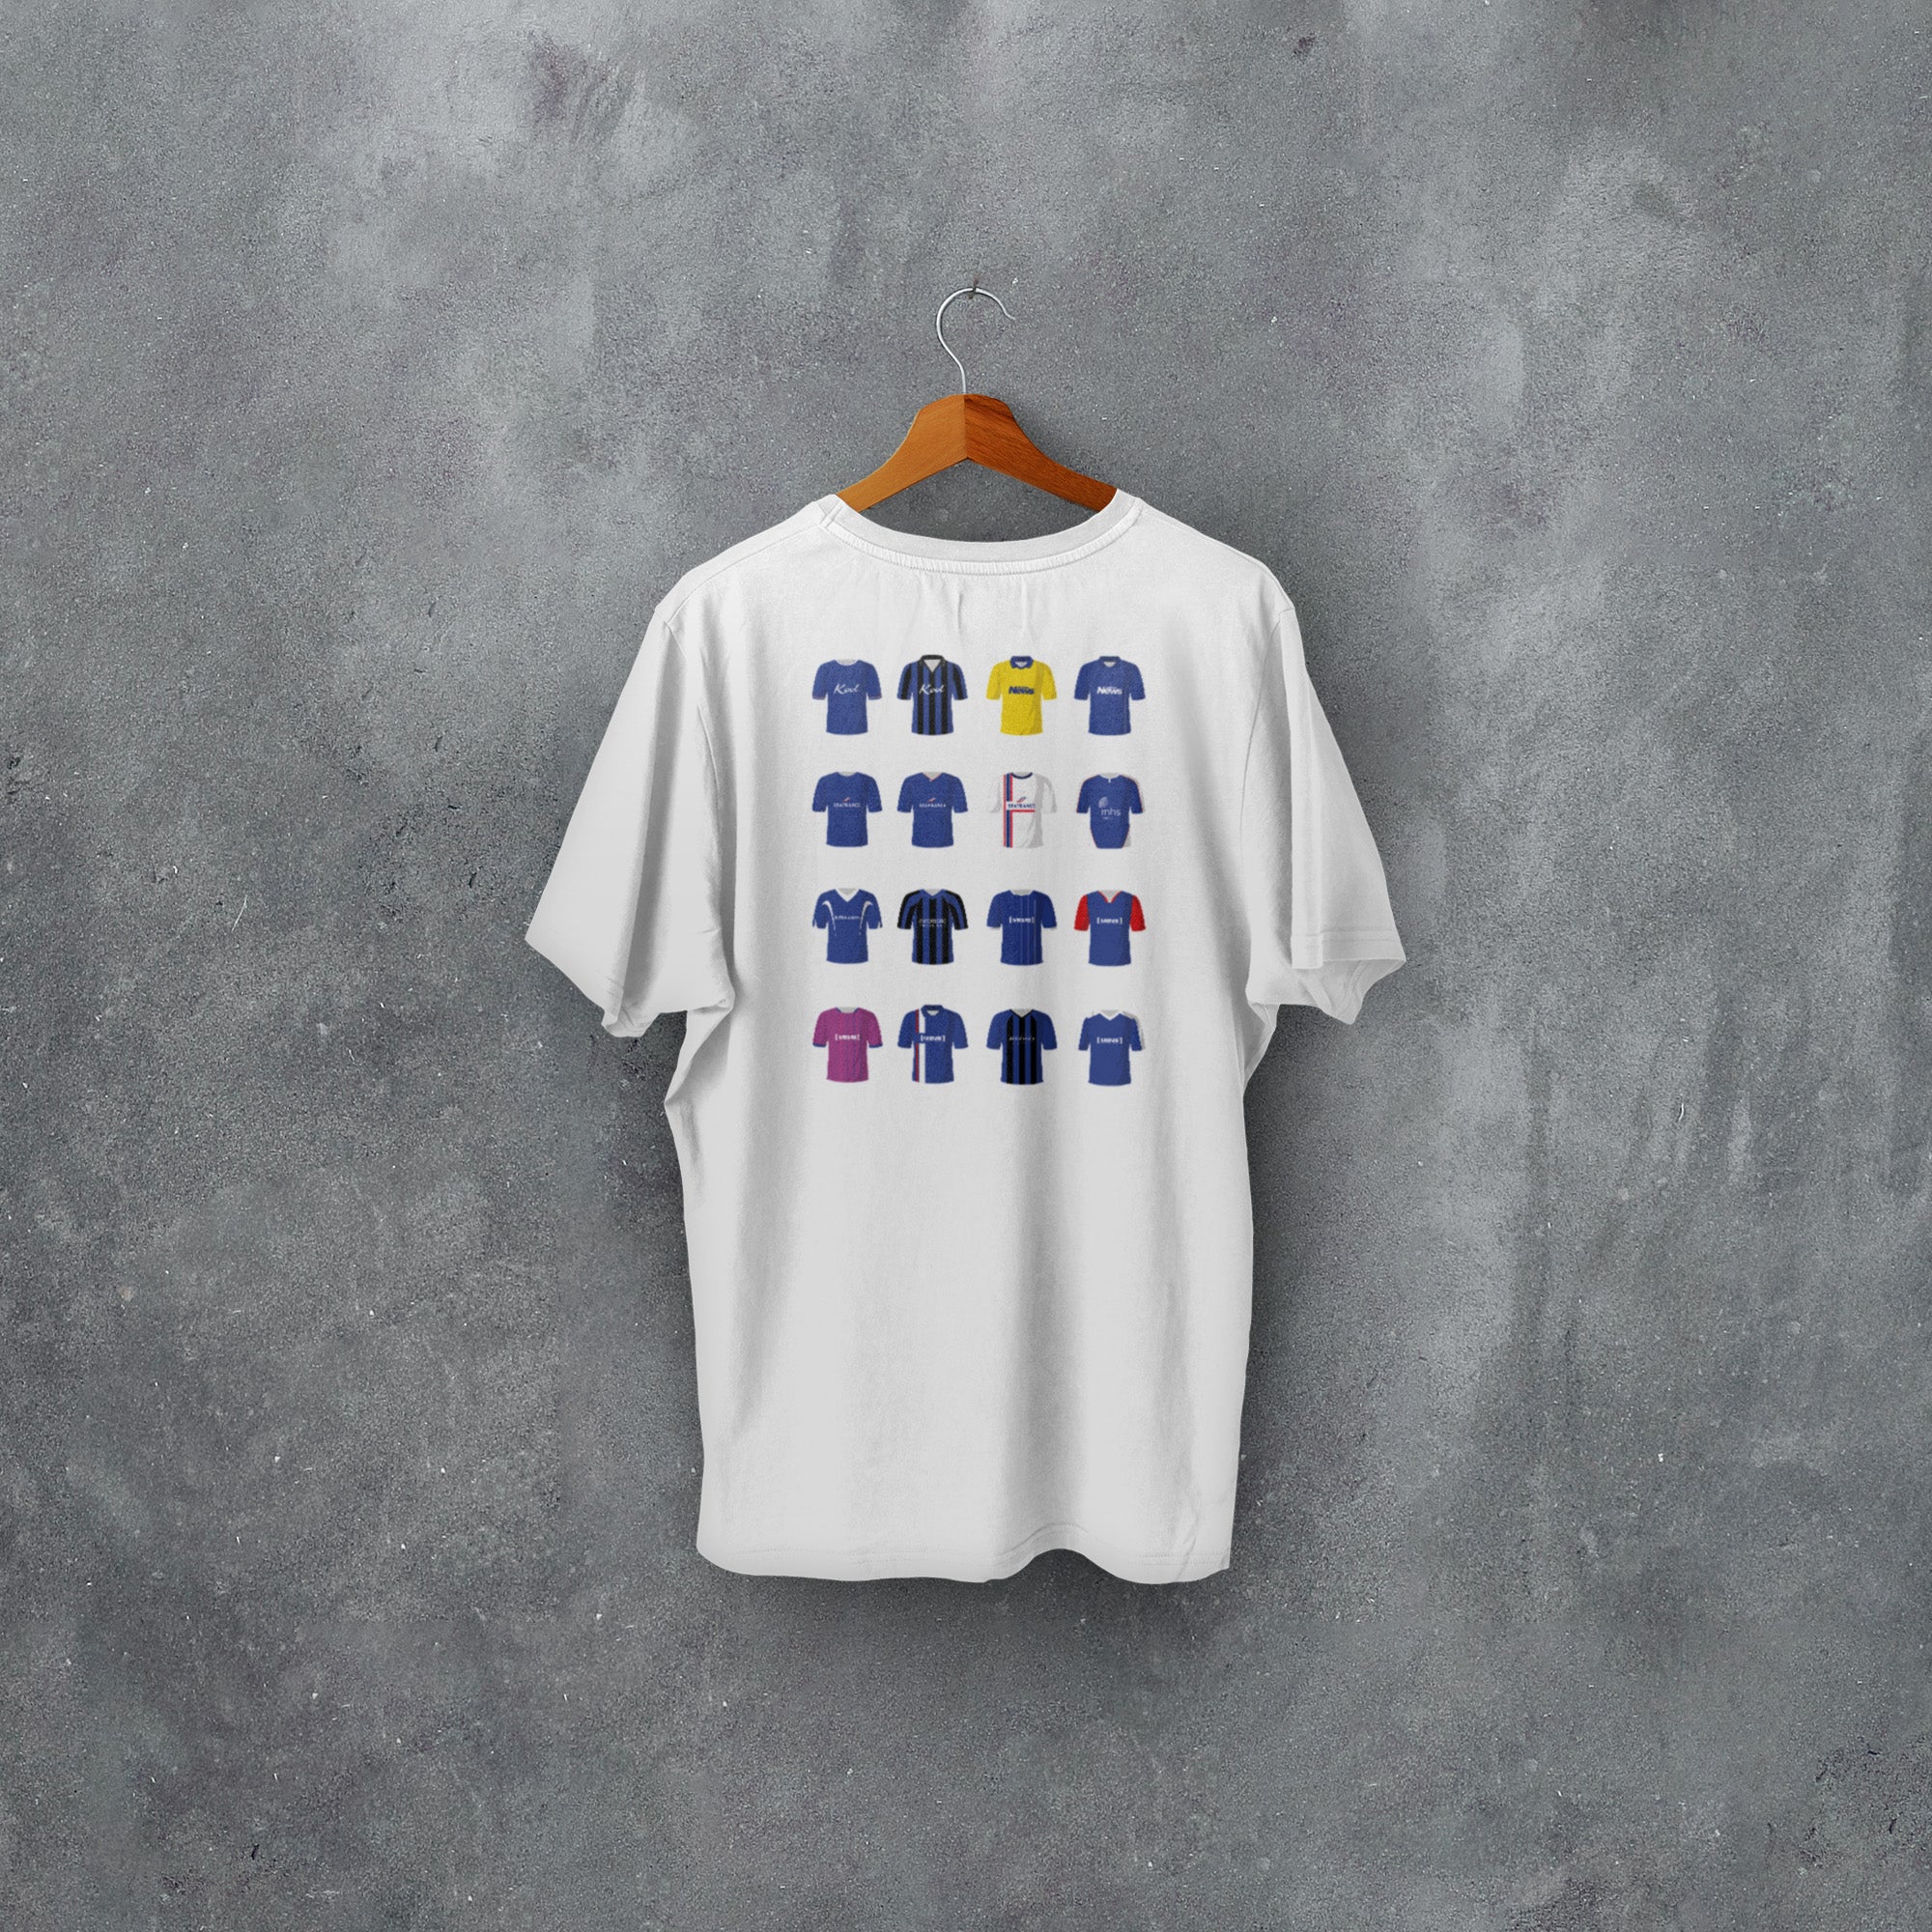 Gillingham Classic Kits Football T-Shirt